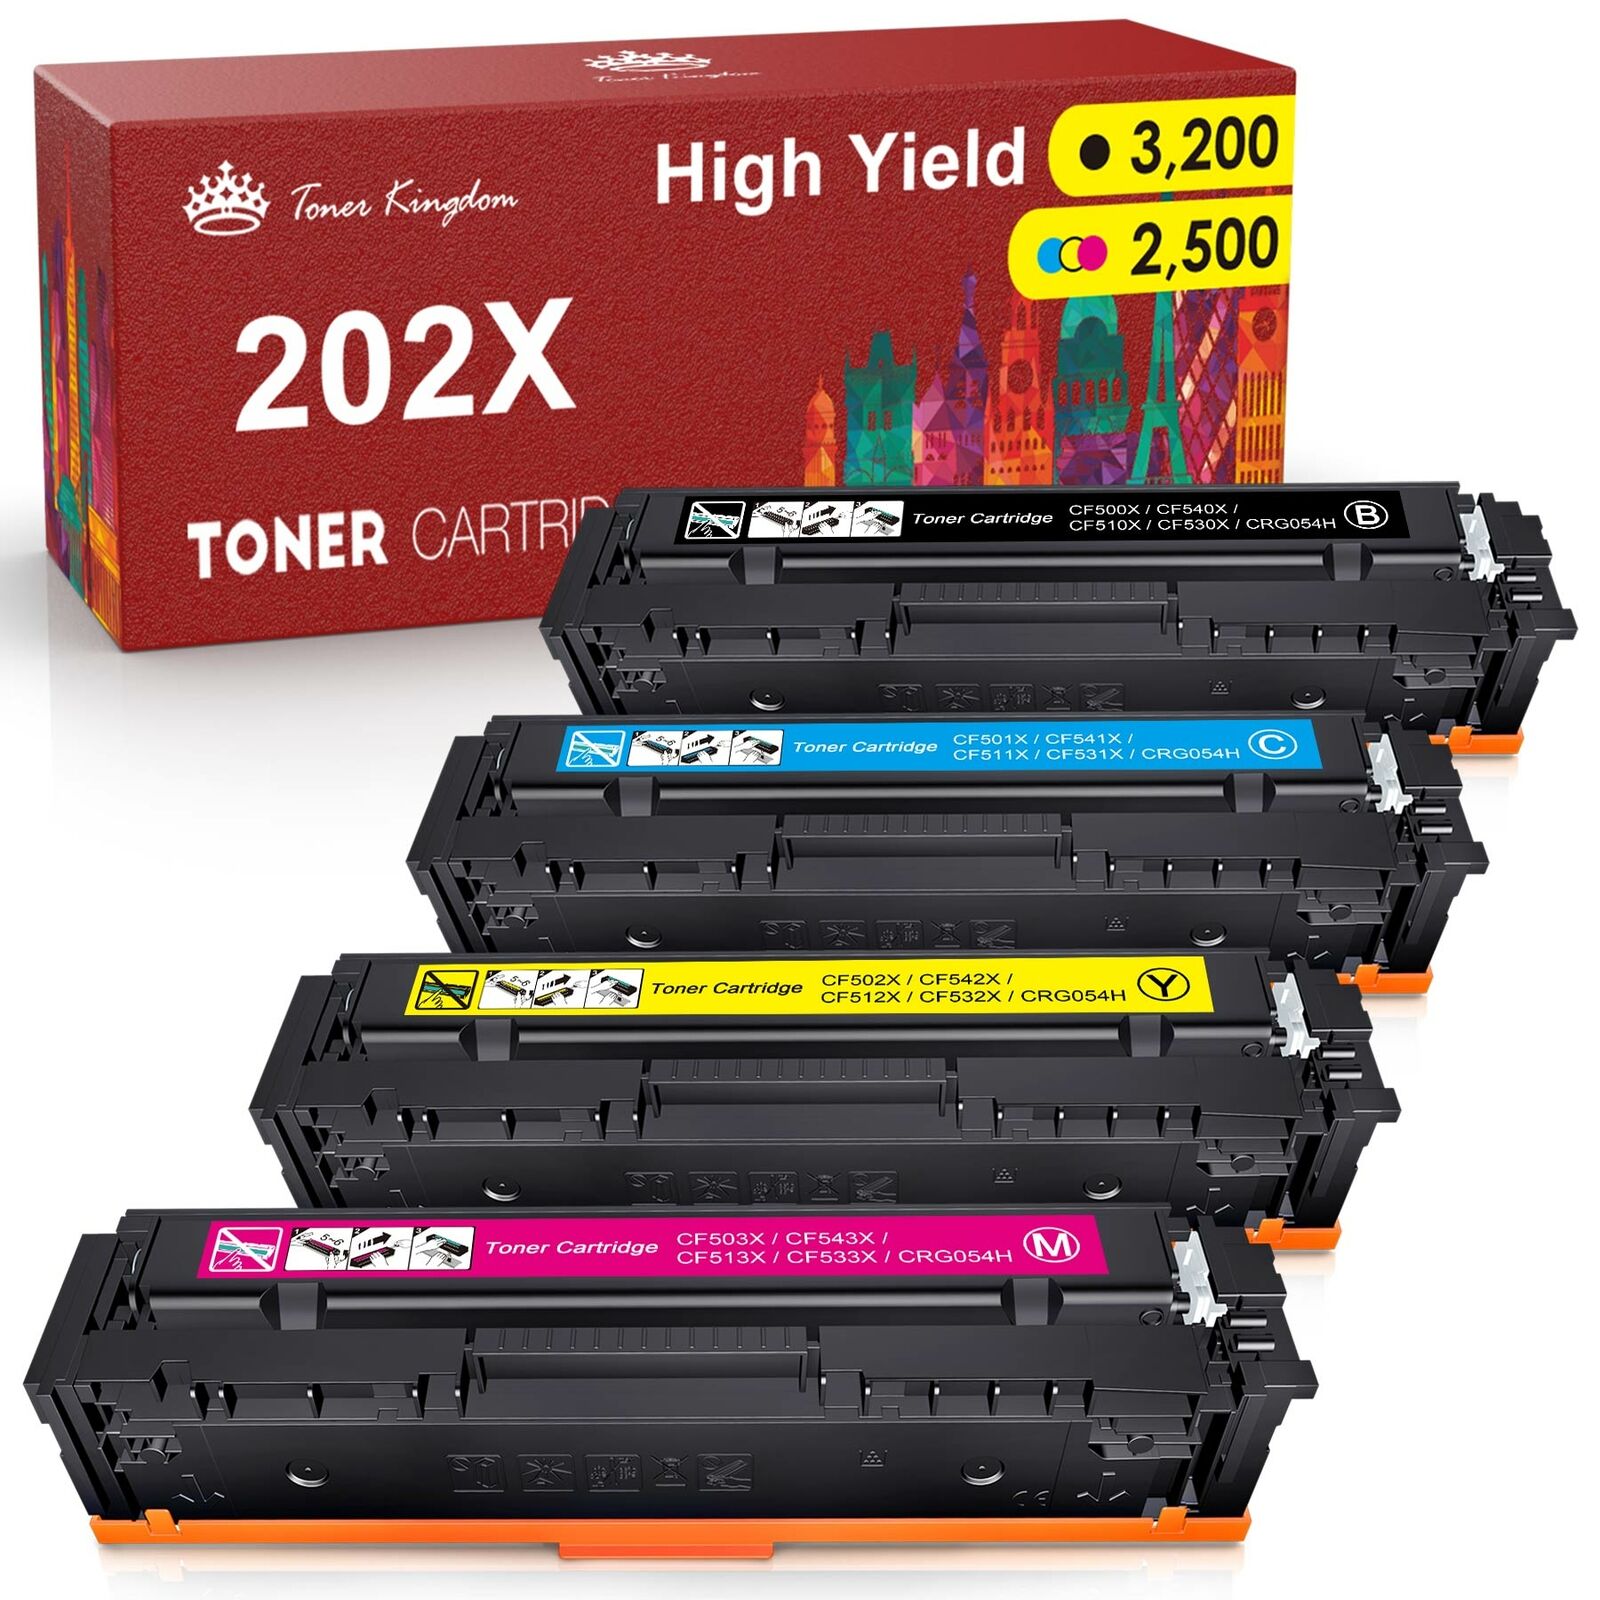 Toner For HP CF500A 202A CF500X 202X Color LaserJet Pro MFP M281fdw M254DW lot